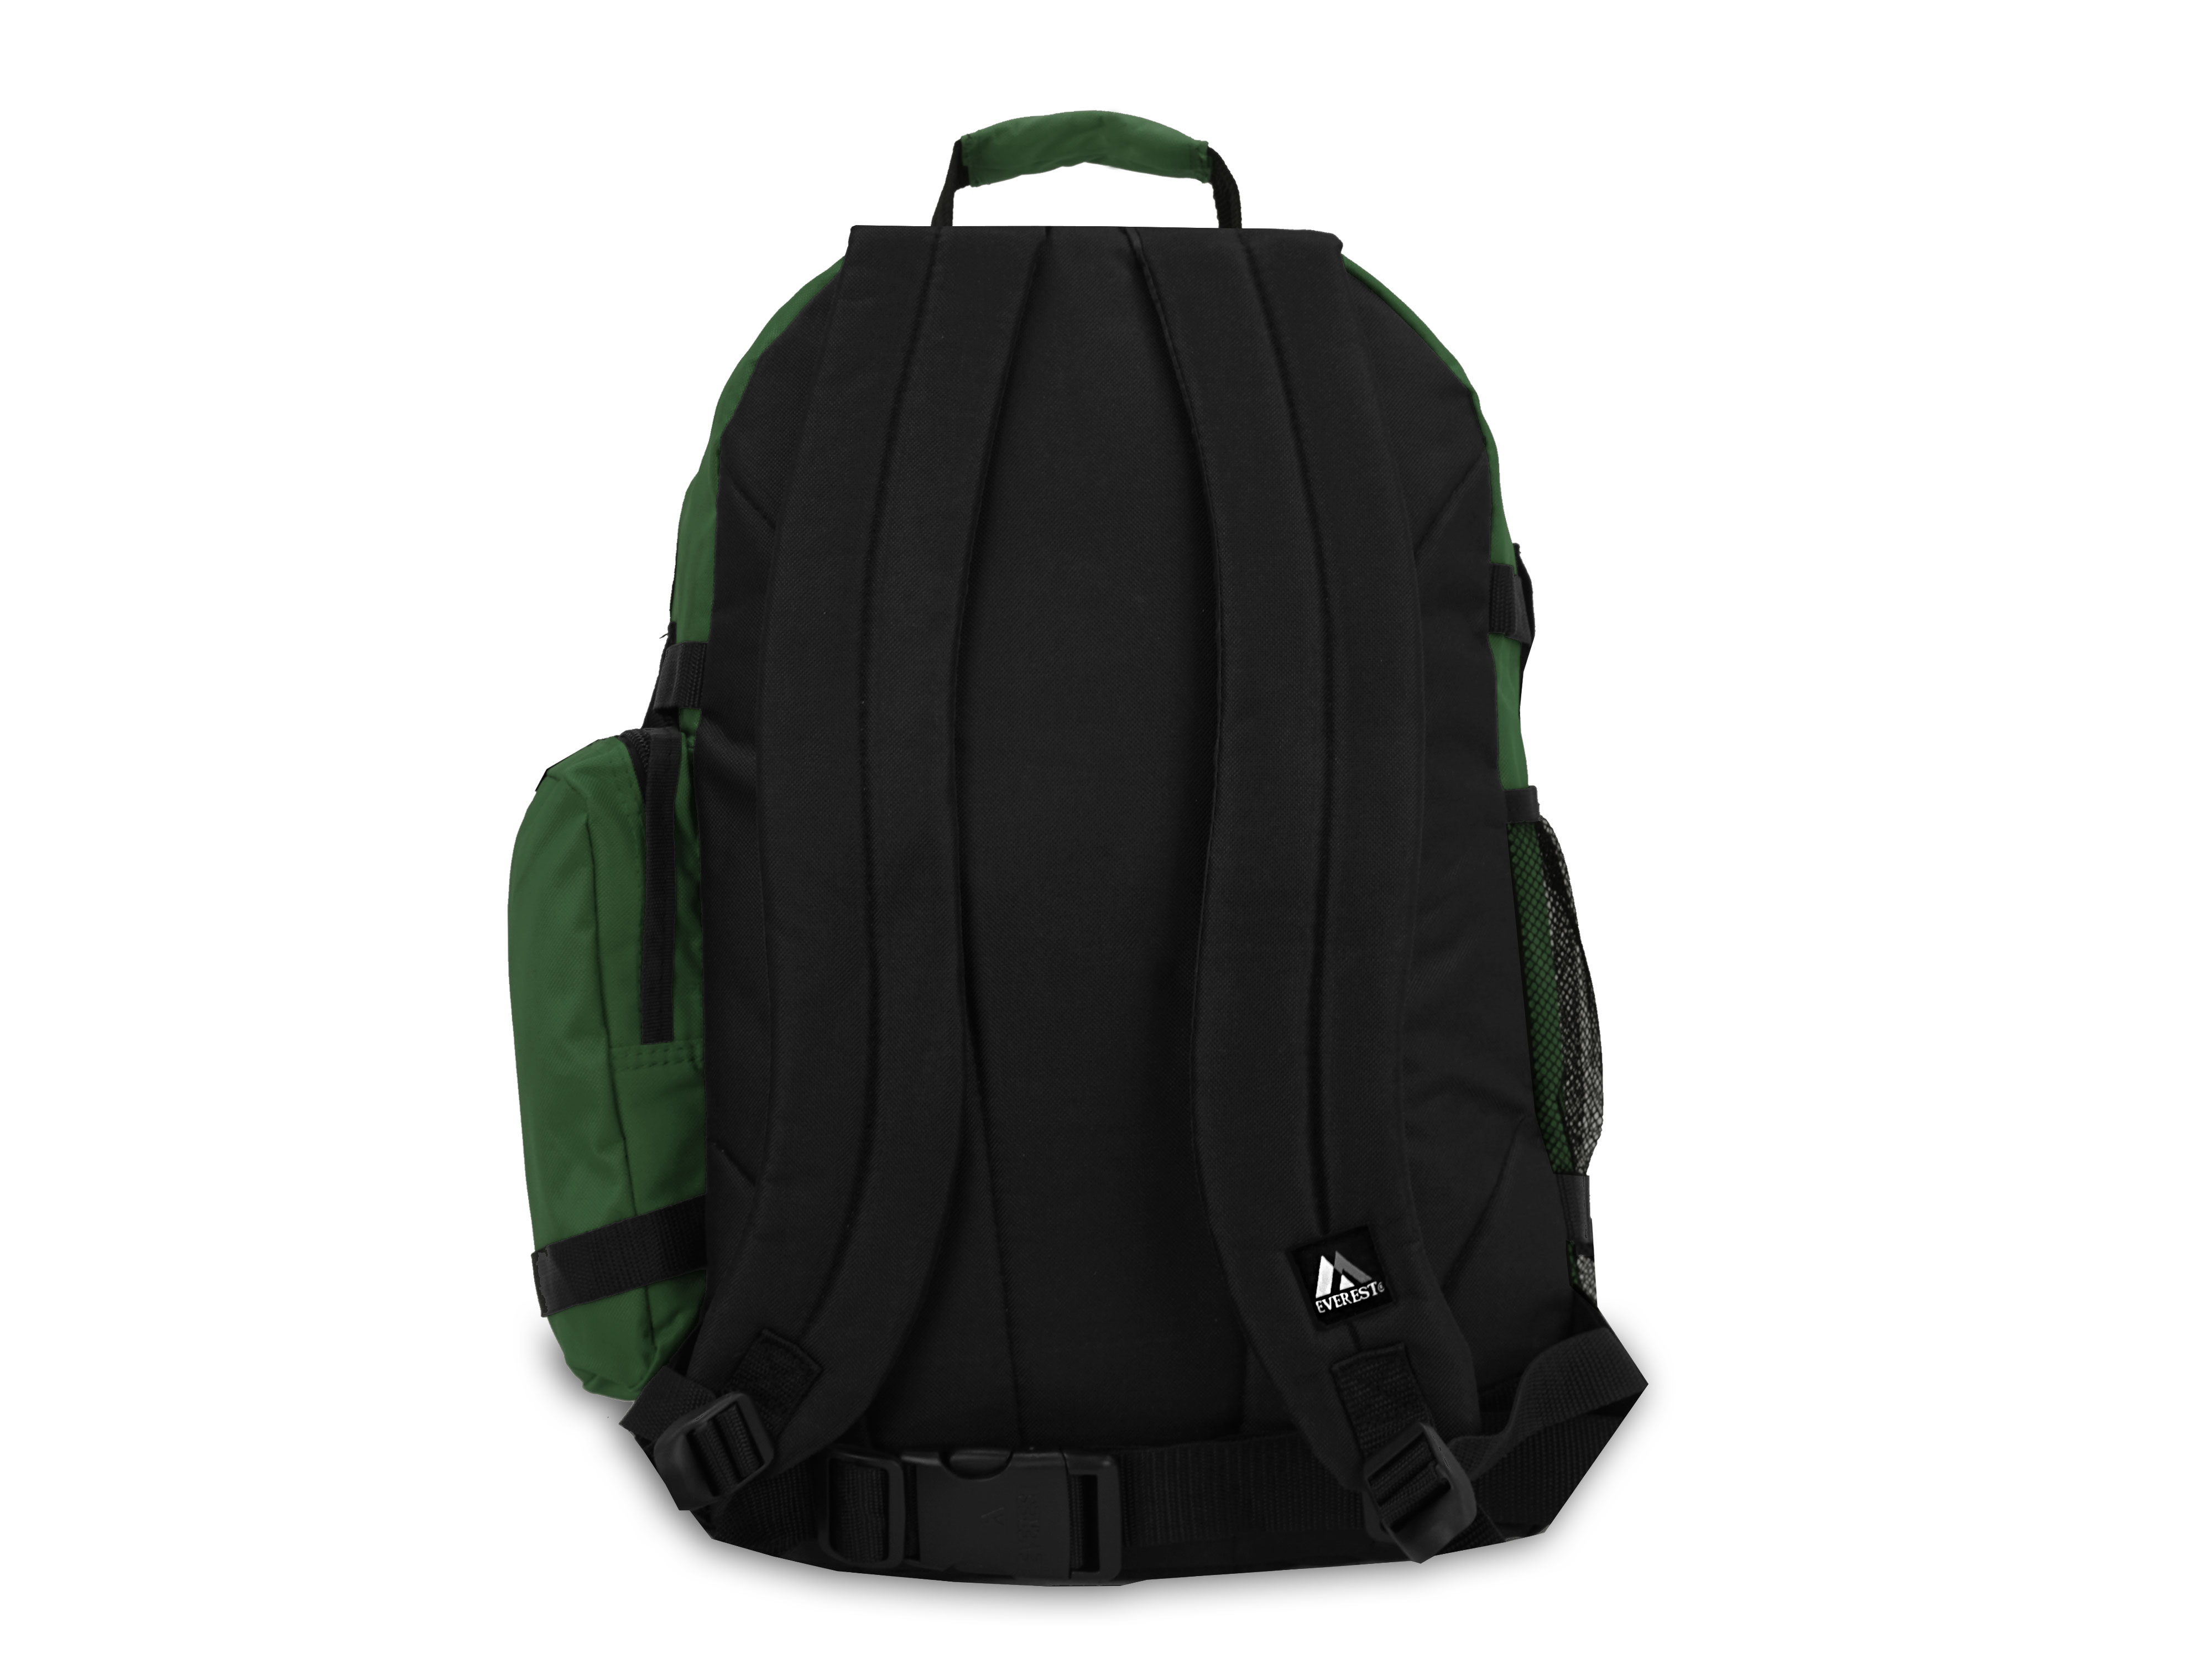 Everest Unisex Oversize Deluxe Backpack Dark Green Black - image 3 of 4